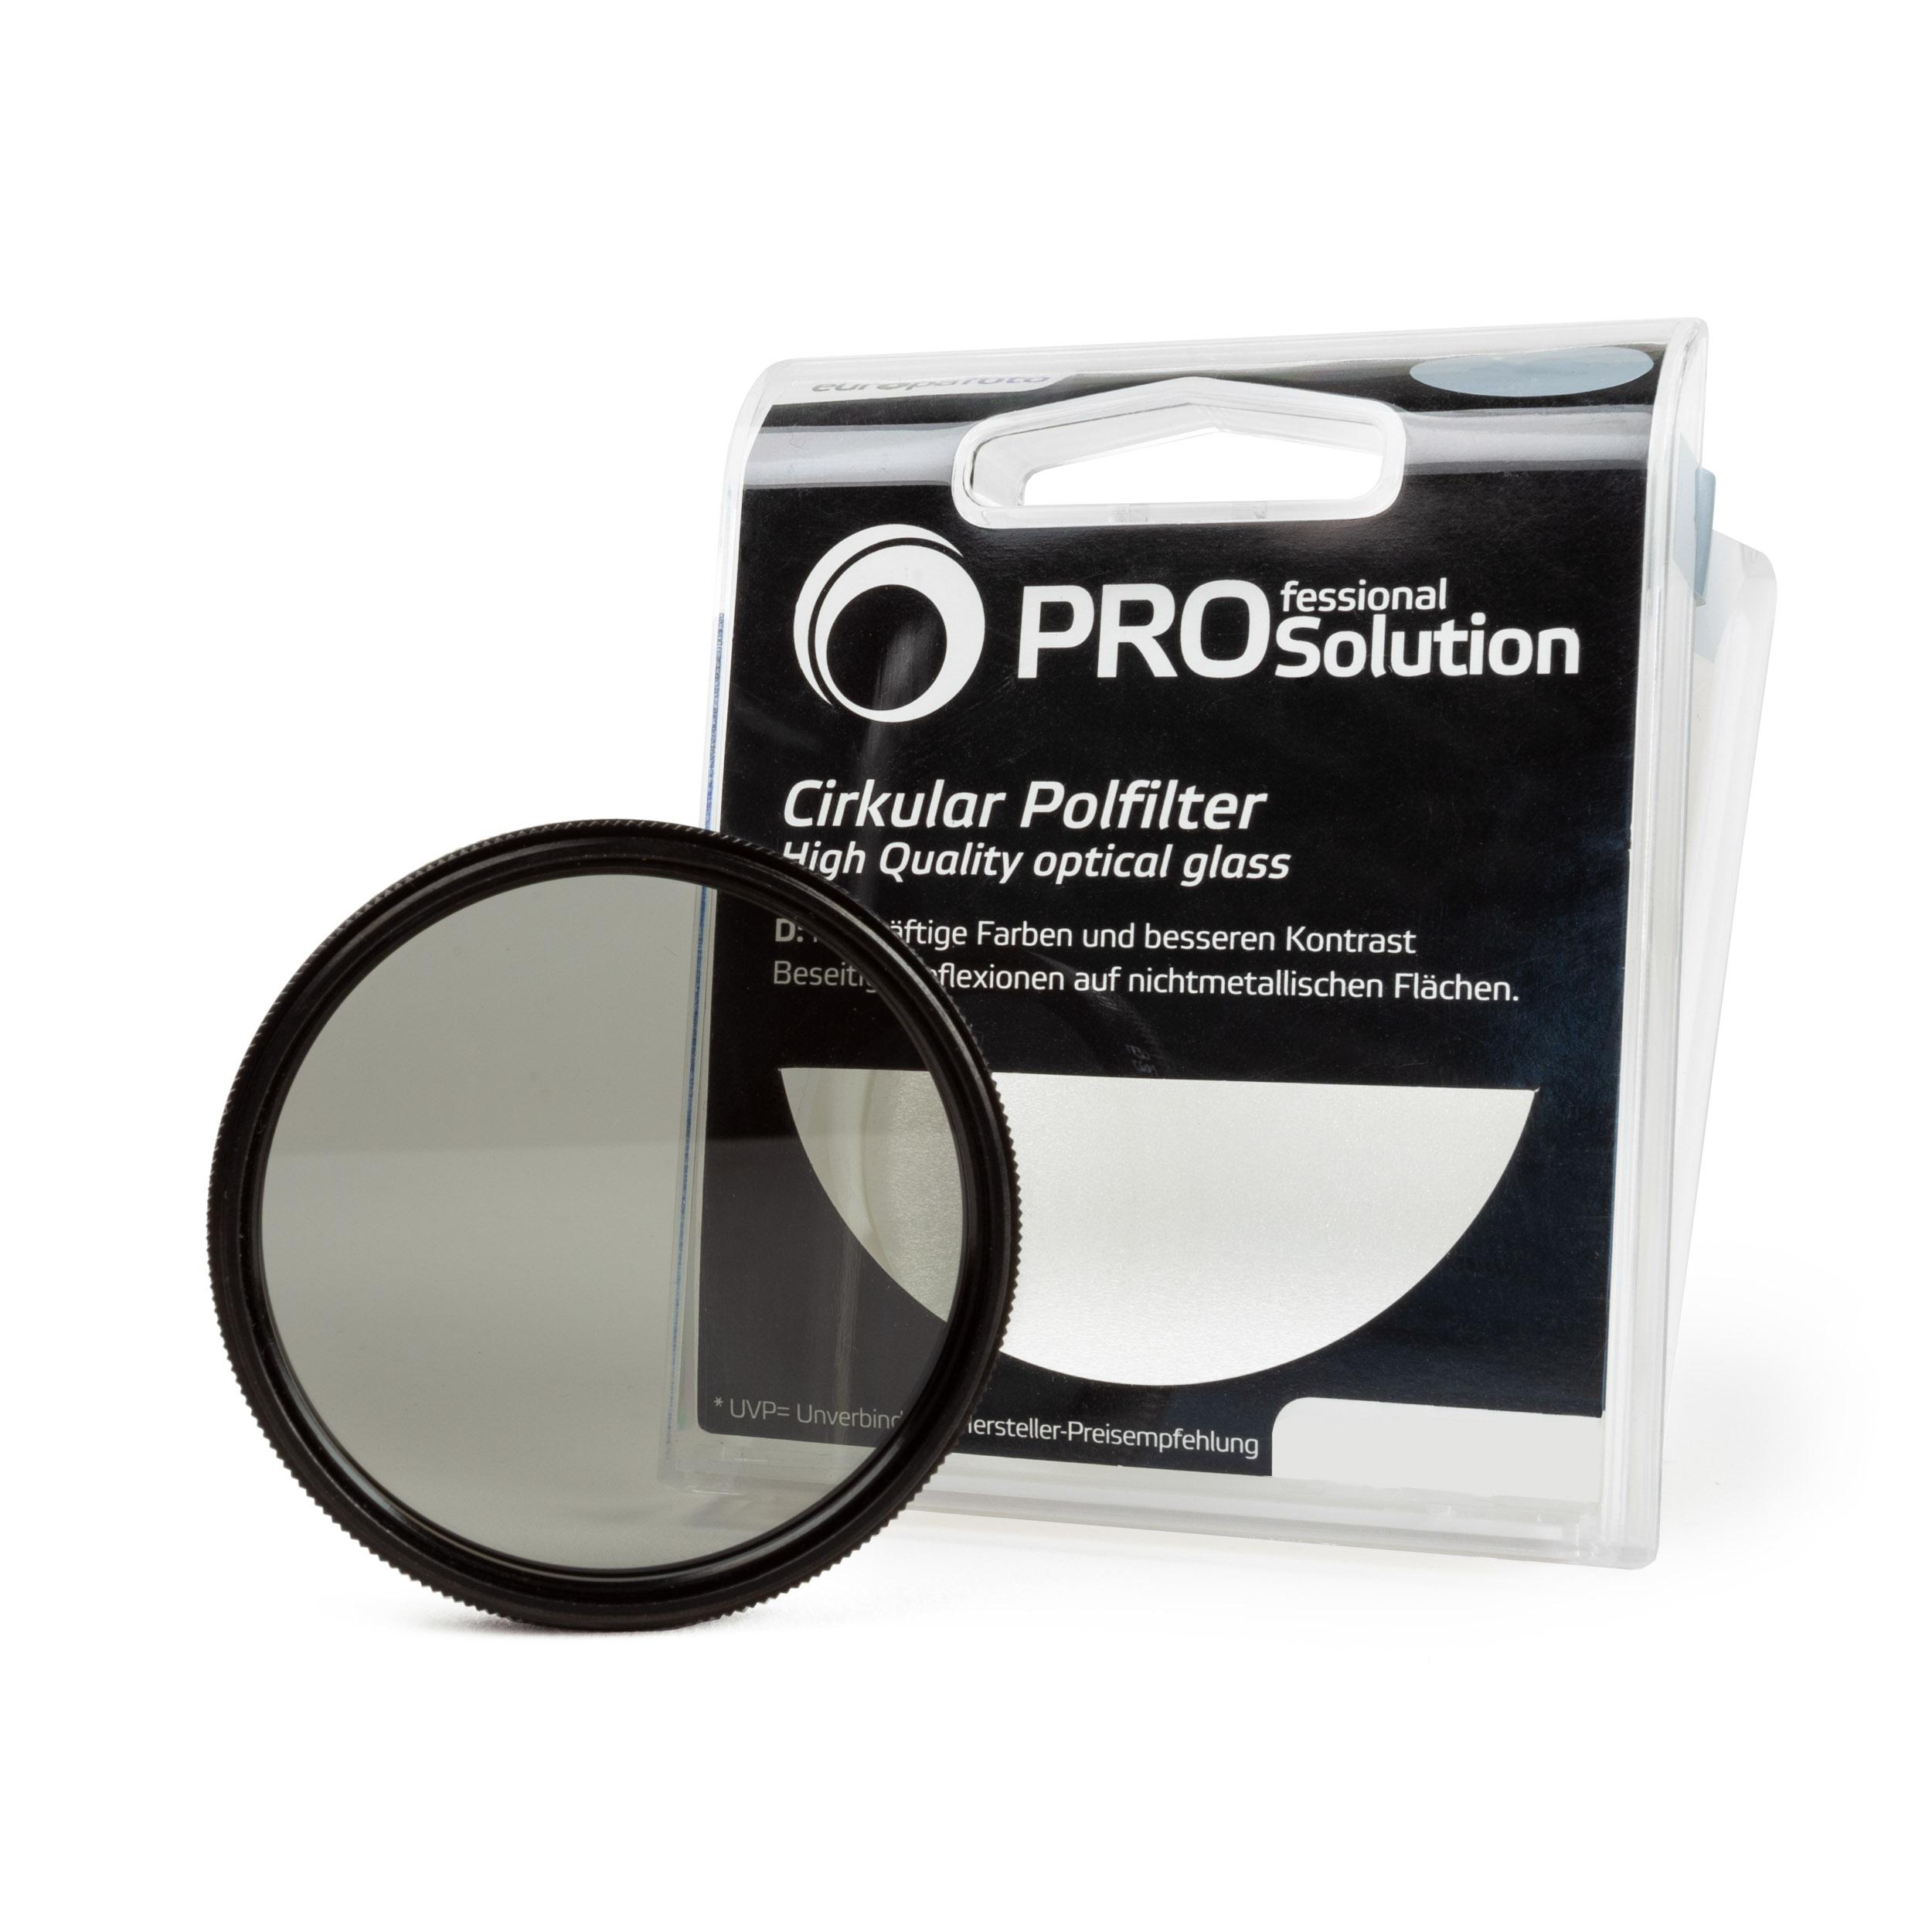 Pro Solution Circular Polfilter - Auswahl: Pro Solution Circular Polfilter 58 mm 